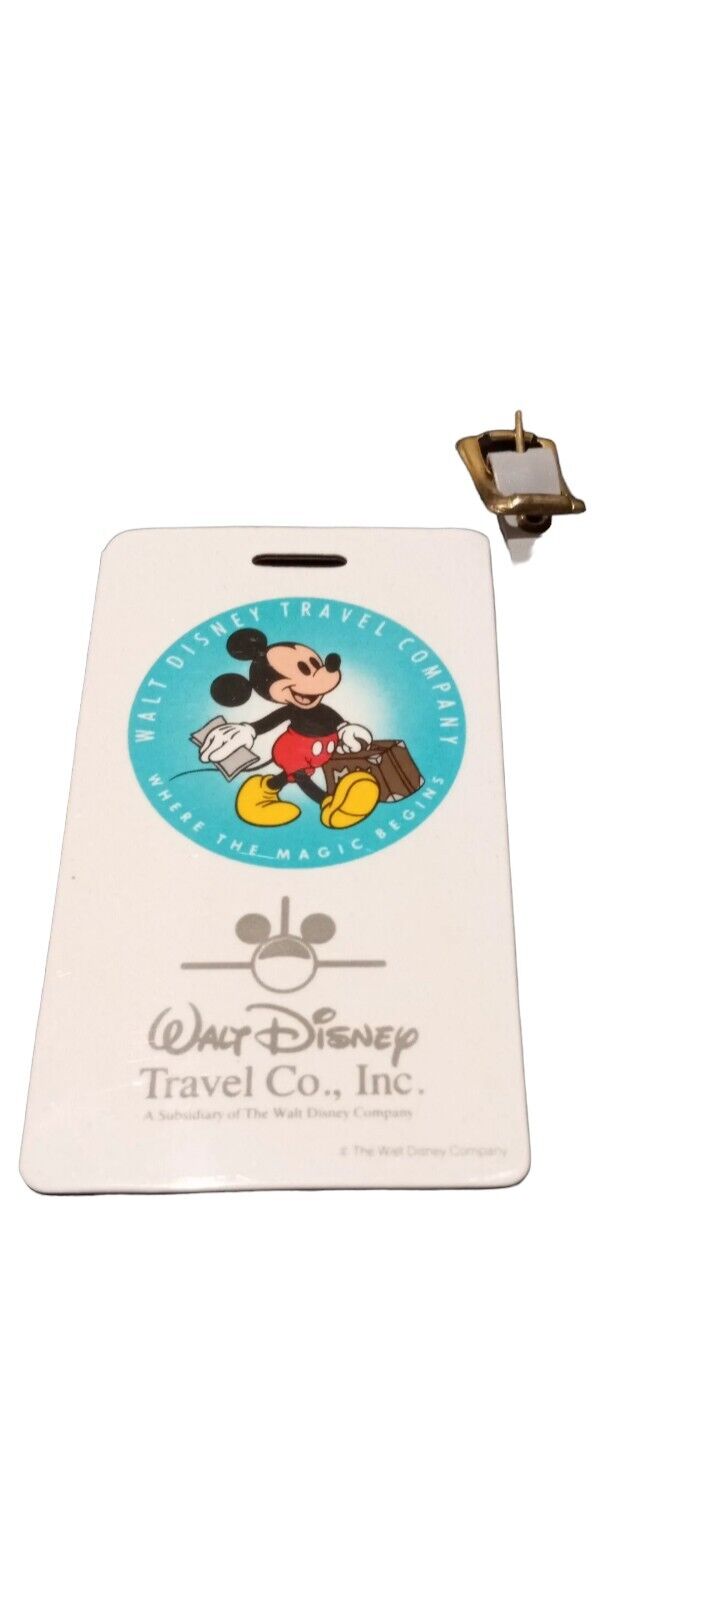 Vintage 1990's Walt Disney Travel Company Luggage Tag Never Used